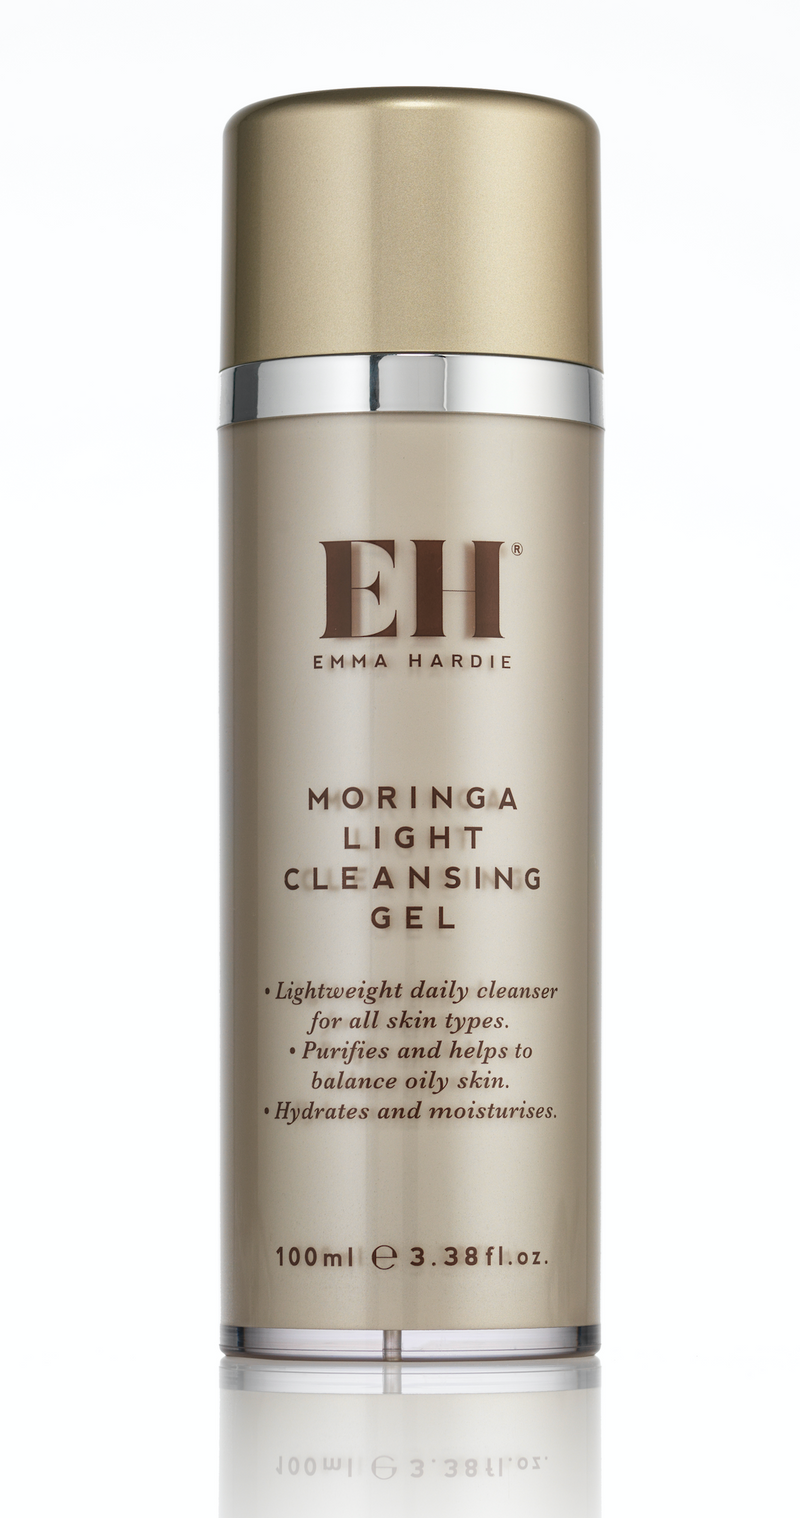 Moringa Light Cleansing Gel